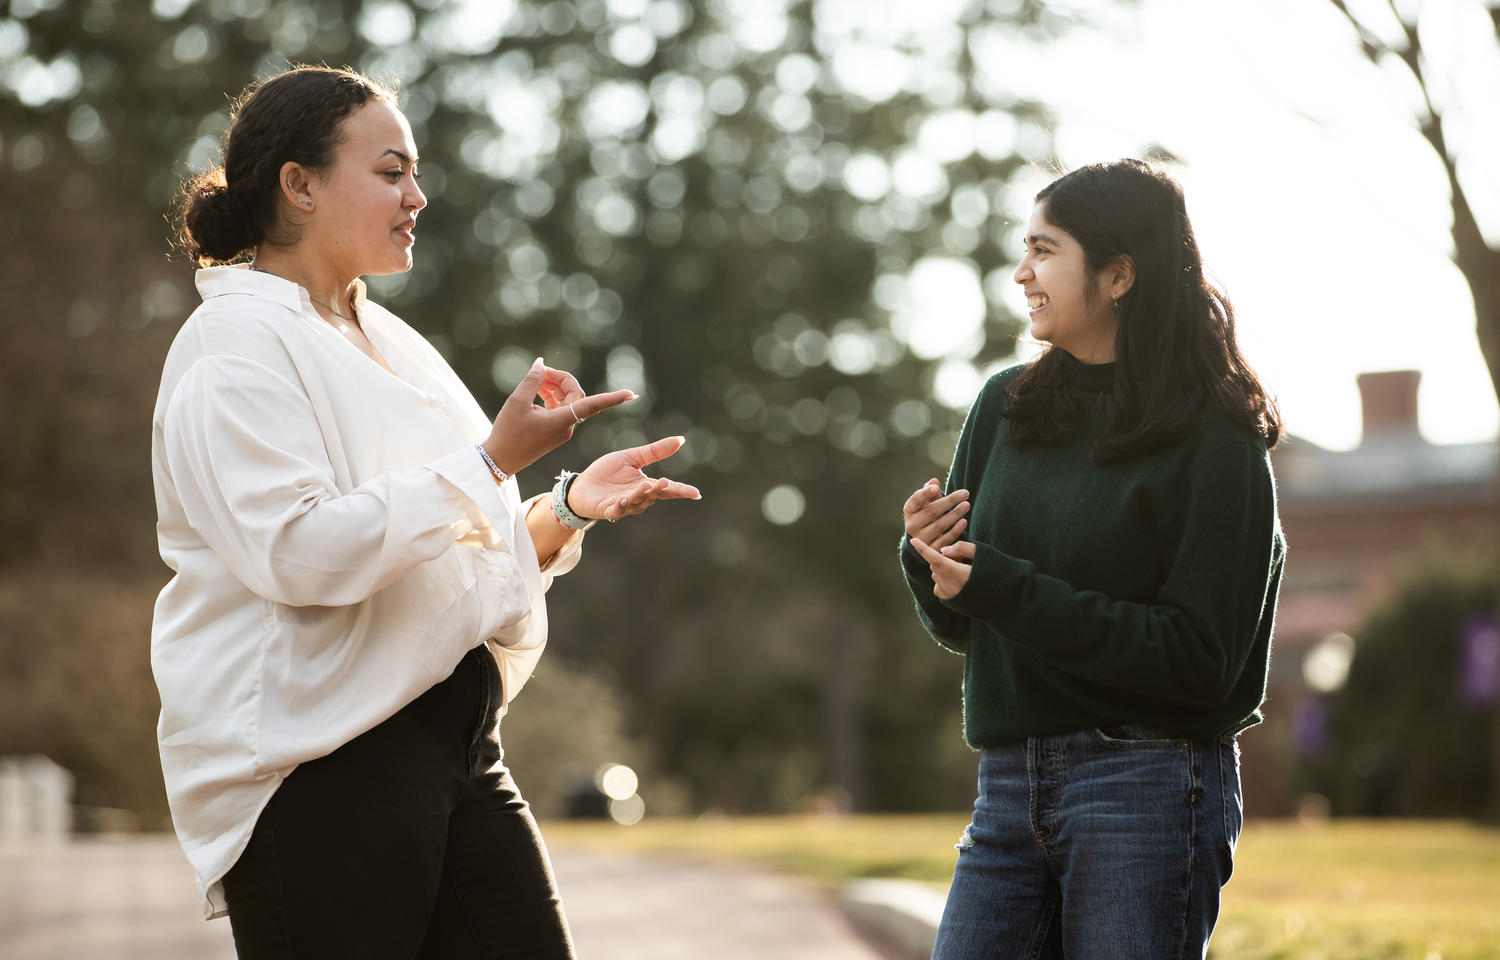 Two women converse using American Sign Language.